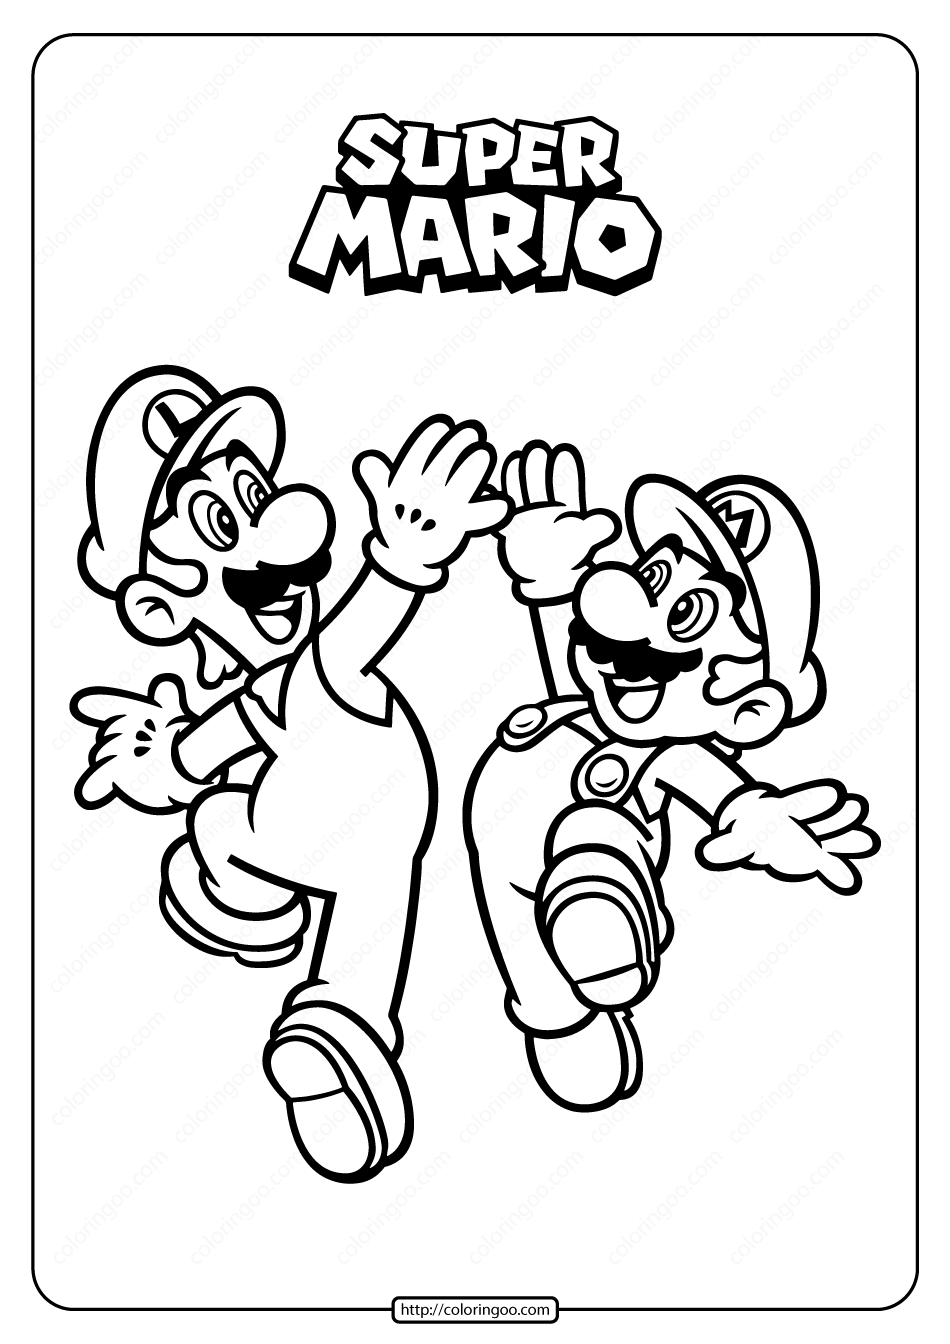 Super Mario Coloring Pages Pdf